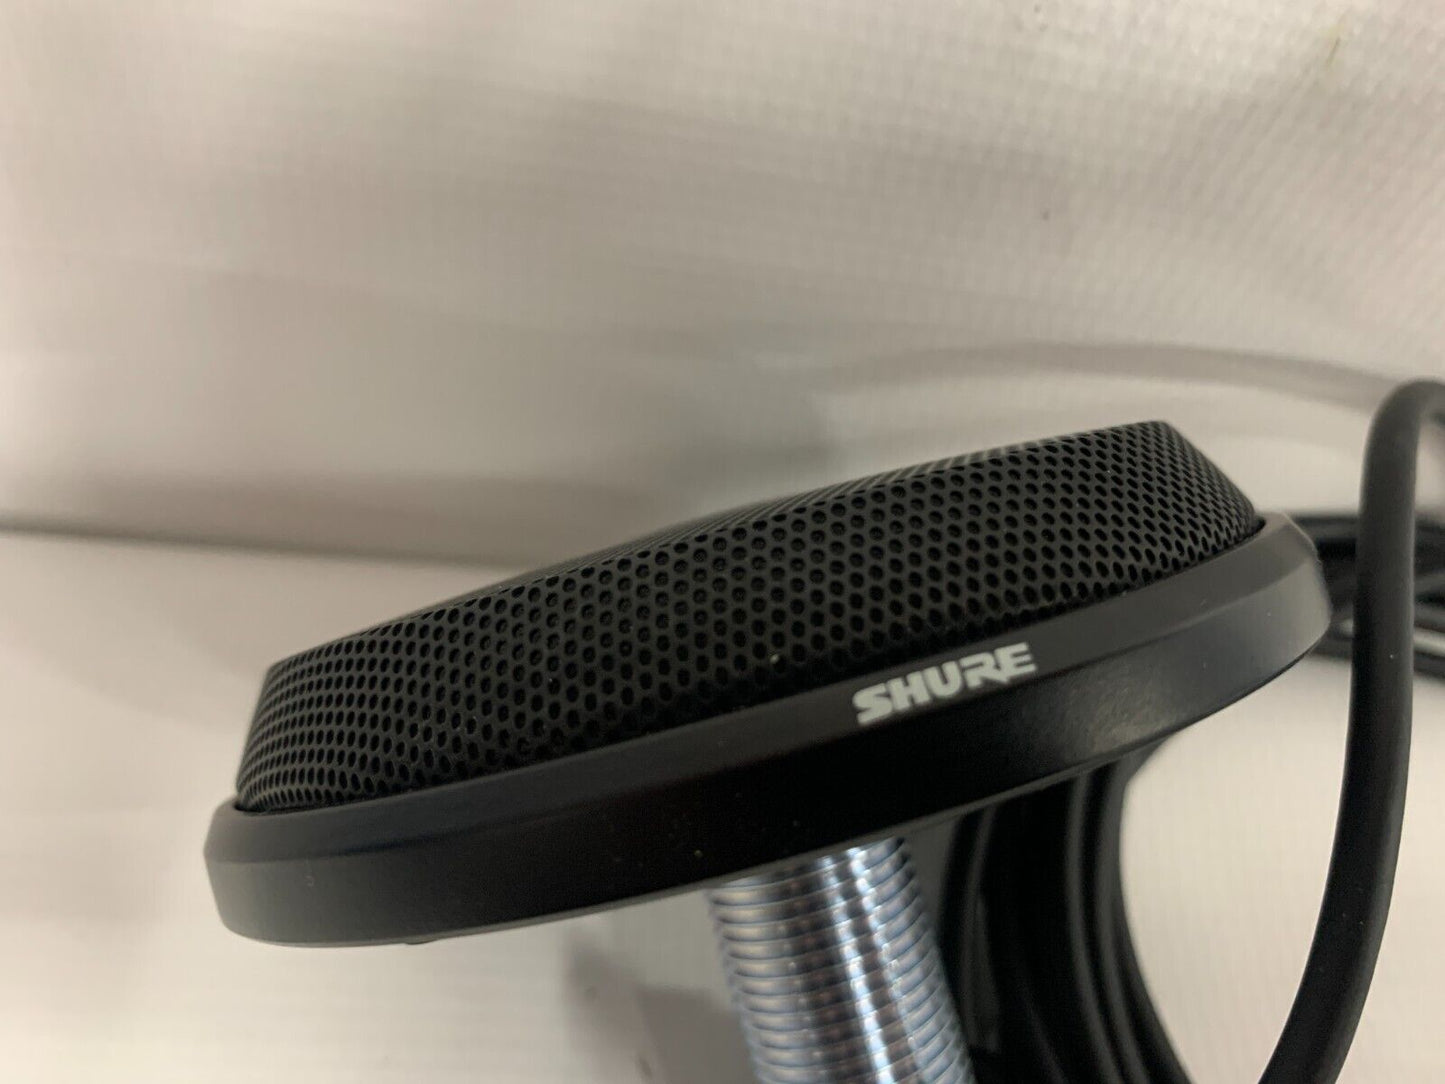 Shure Microflex MX396/C-TRI  3-Element Cardioid Condenser Conference Microphone